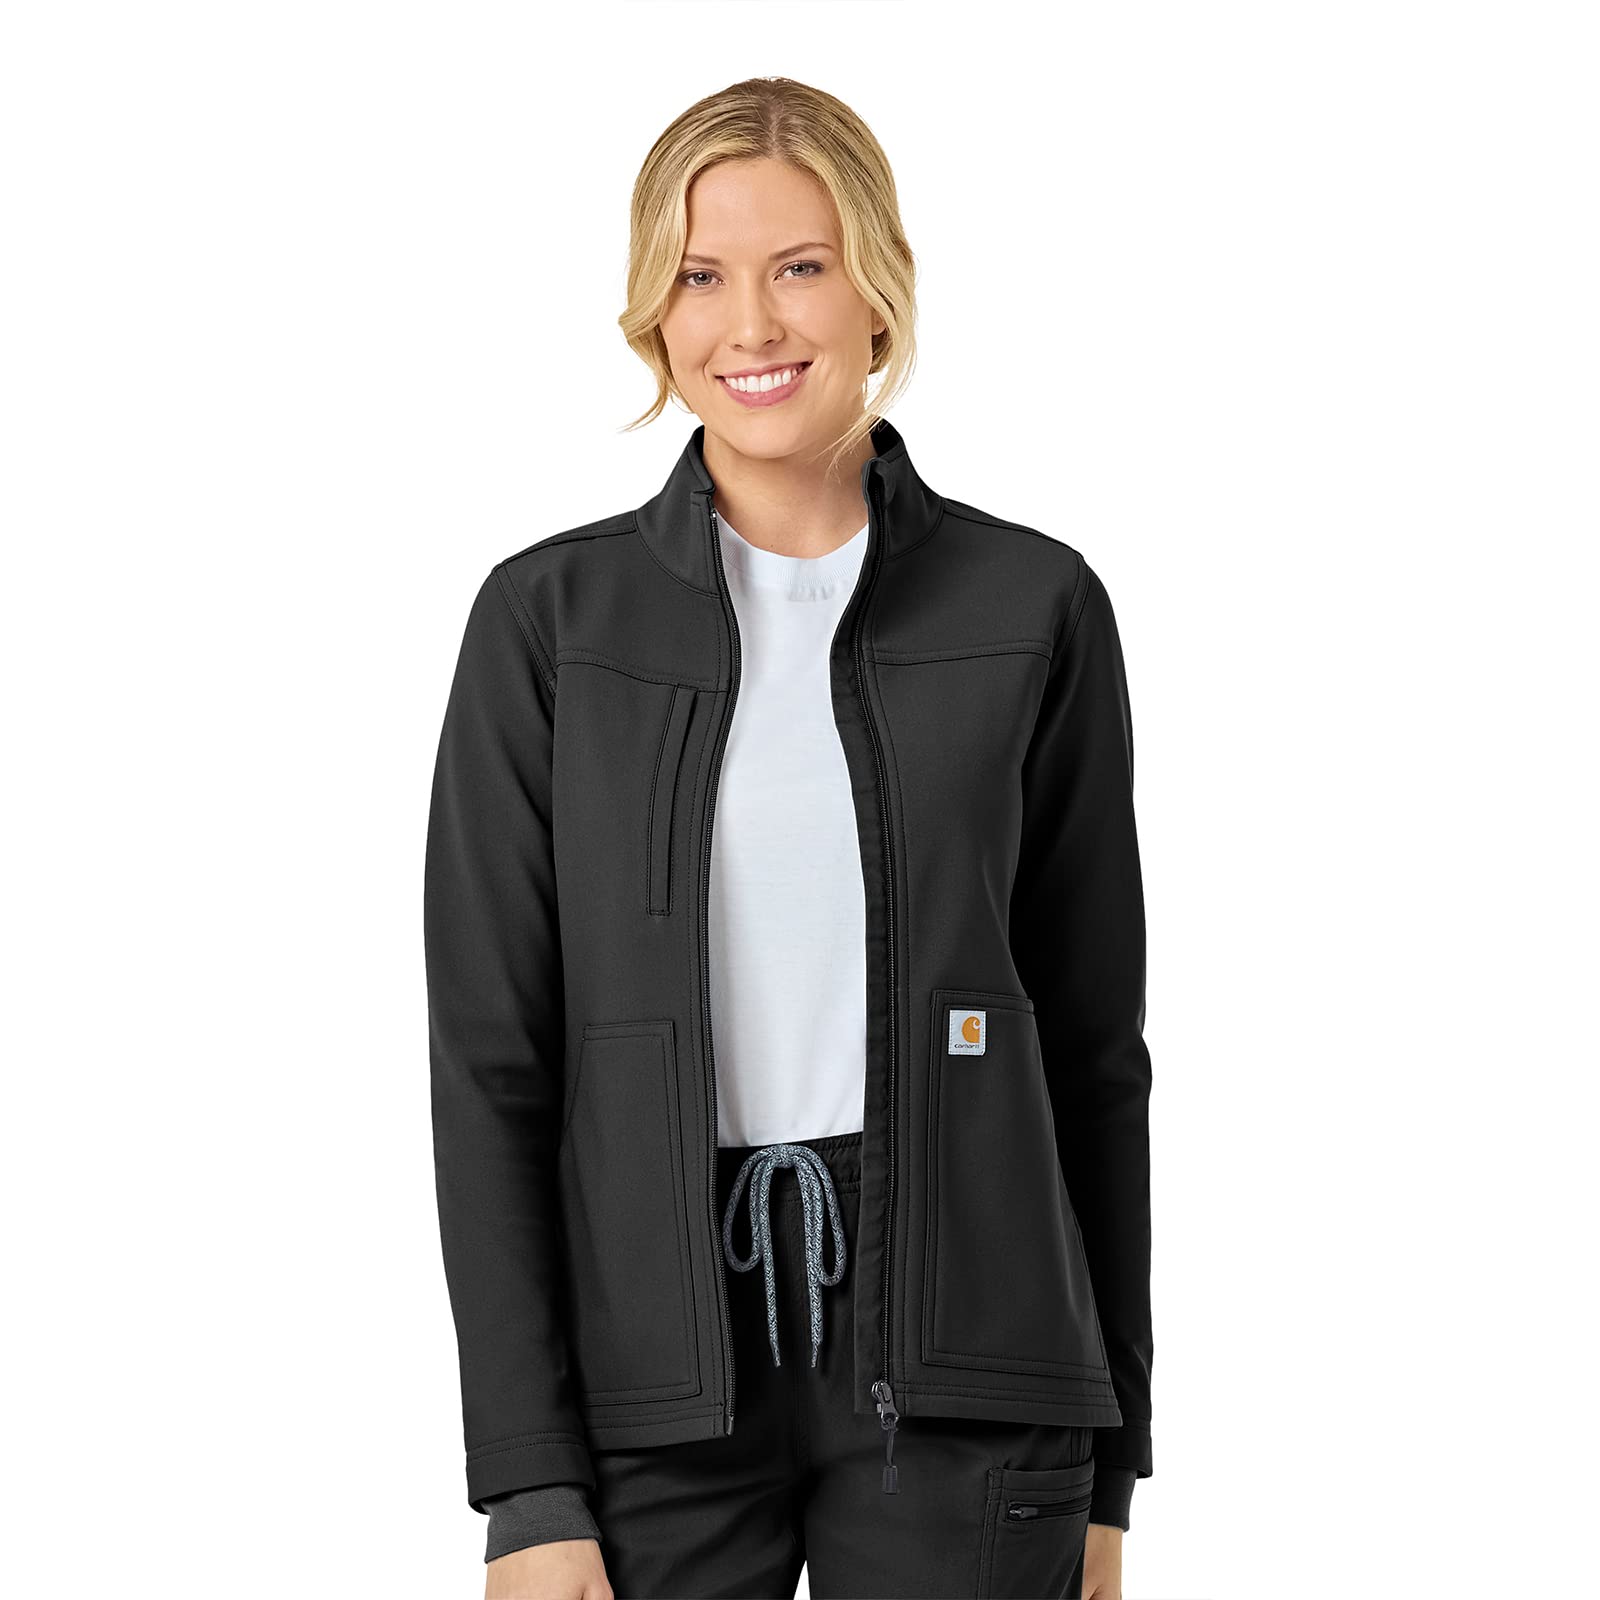 Carhartt Women's Rugged Flex Modern Fit Fluid Resistant Bonded Fleece Jacket